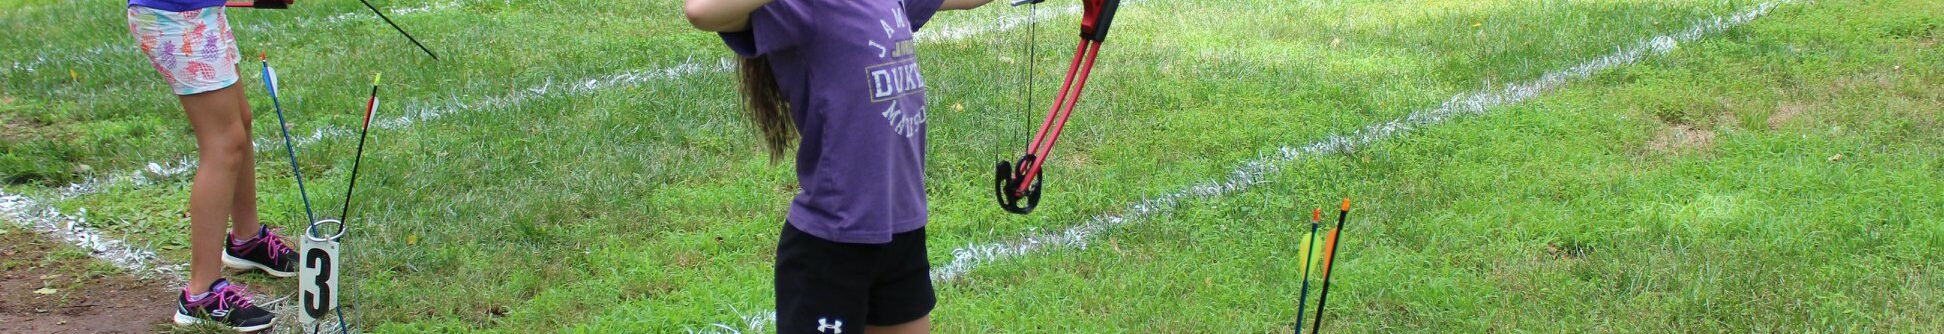 Archery Summer Camps Near Succasunna